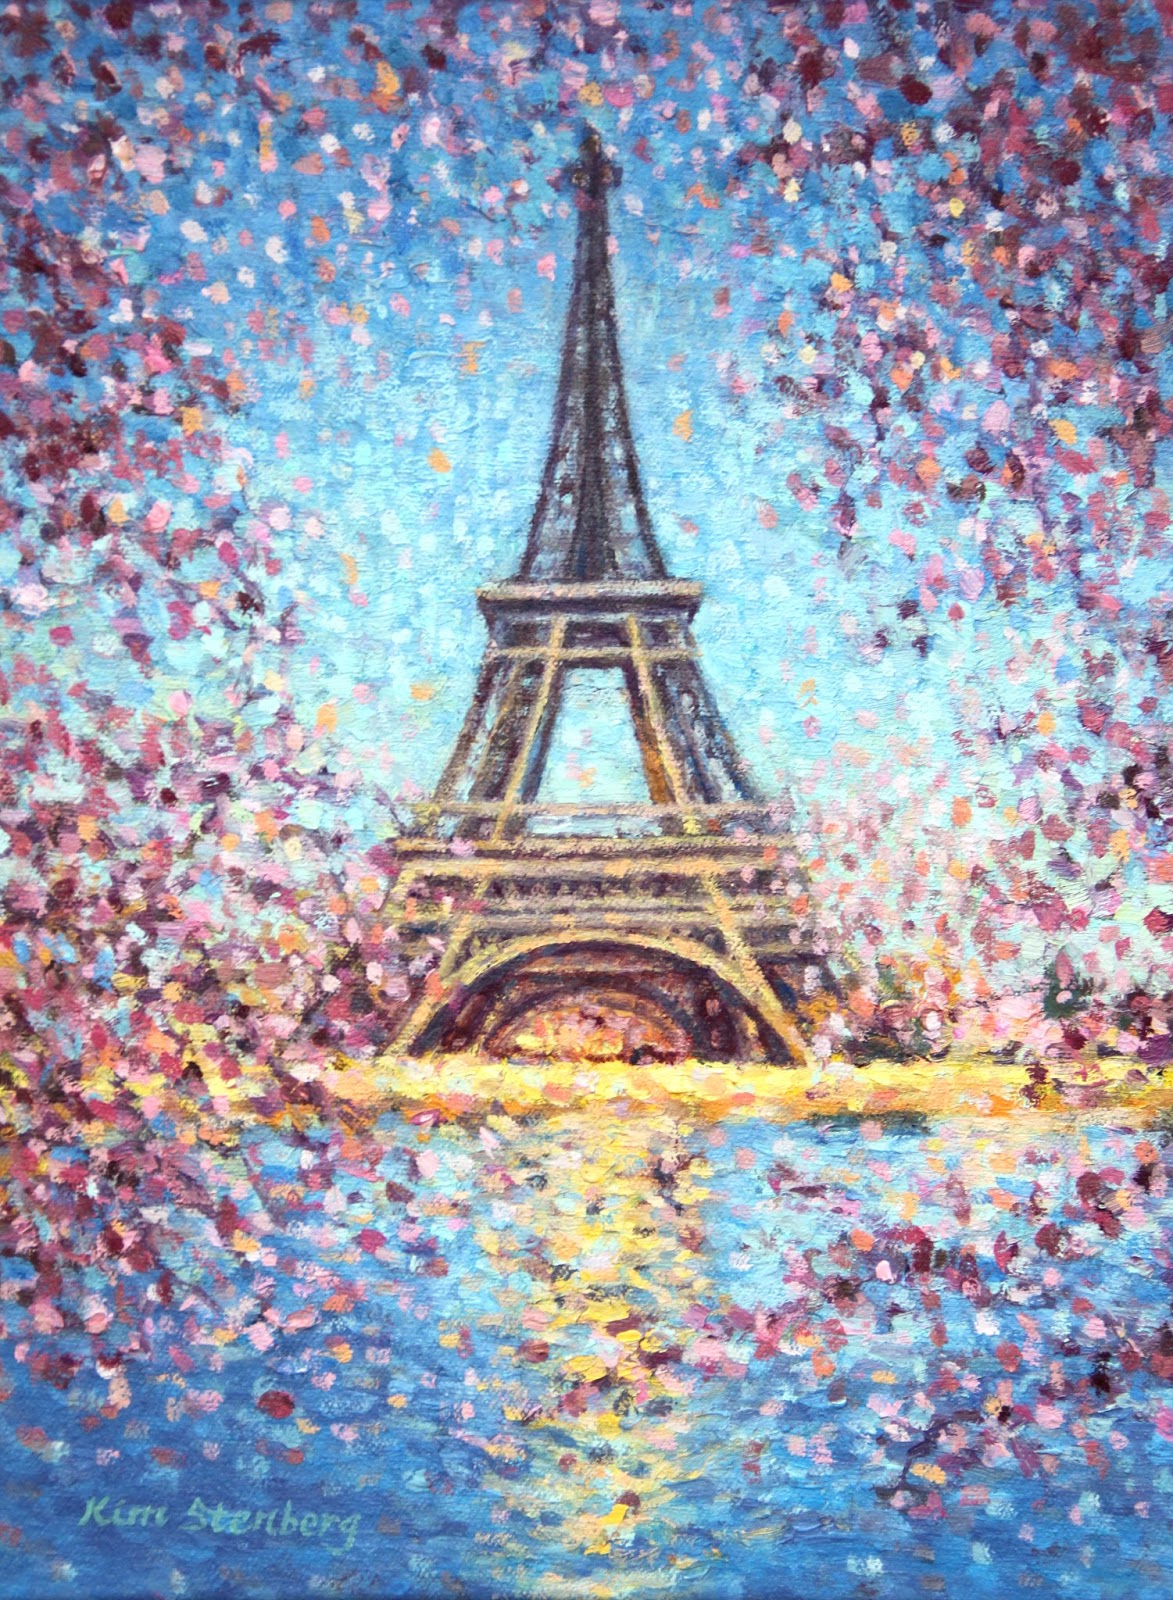 Kim Stenberg's Painting Journal "Eiffel Tower Spring